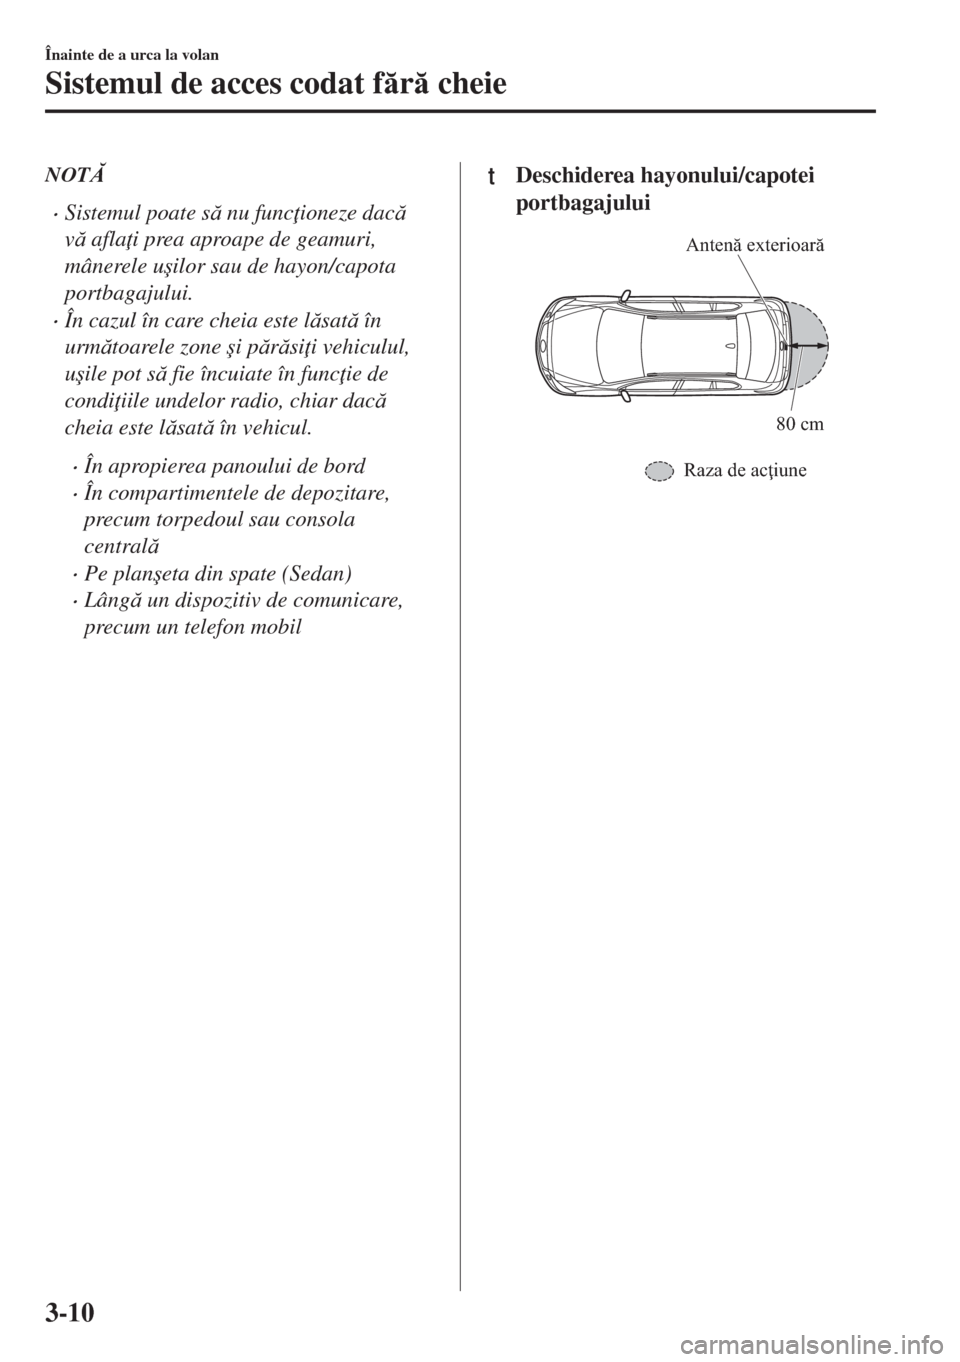 MAZDA MODEL 6 2018  Manualul de utilizare (in Romanian) NOT
•Sistemul poate s nu func ioneze dac
v afla i prea aproape de geamuri,
mânerele u�úilor sau de hayon/capota
portbagajului.
•În cazul în care cheia este lsat în
urmtoarele 